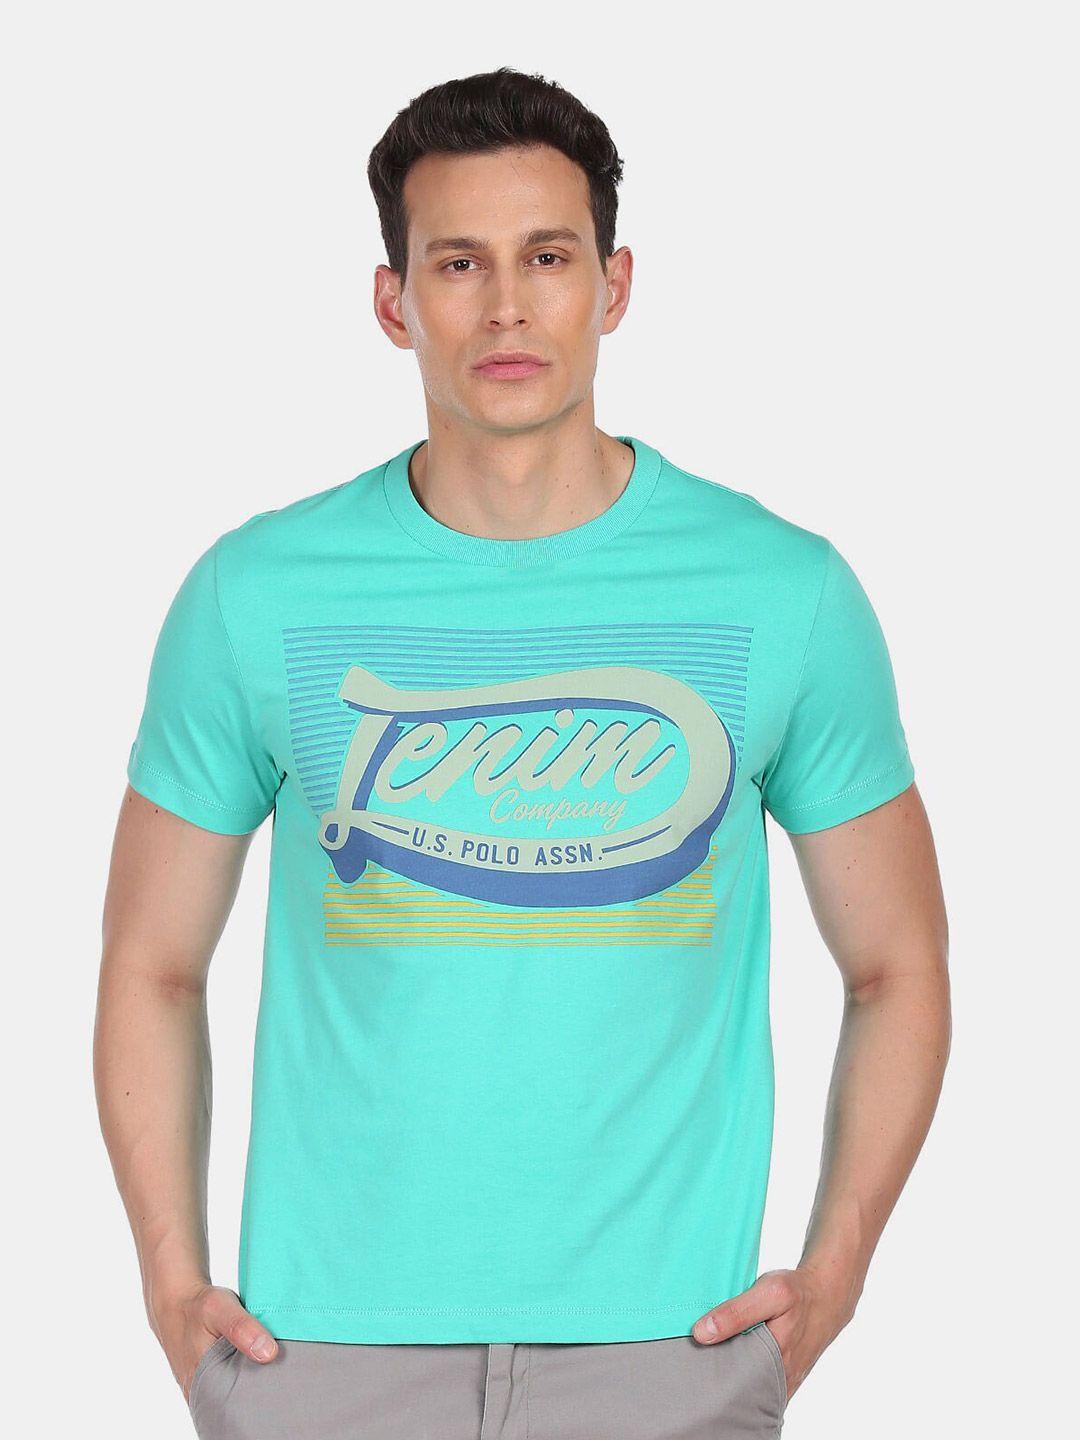 u.s. polo assn. denim co.men green & turquoise typography printed t-shirt